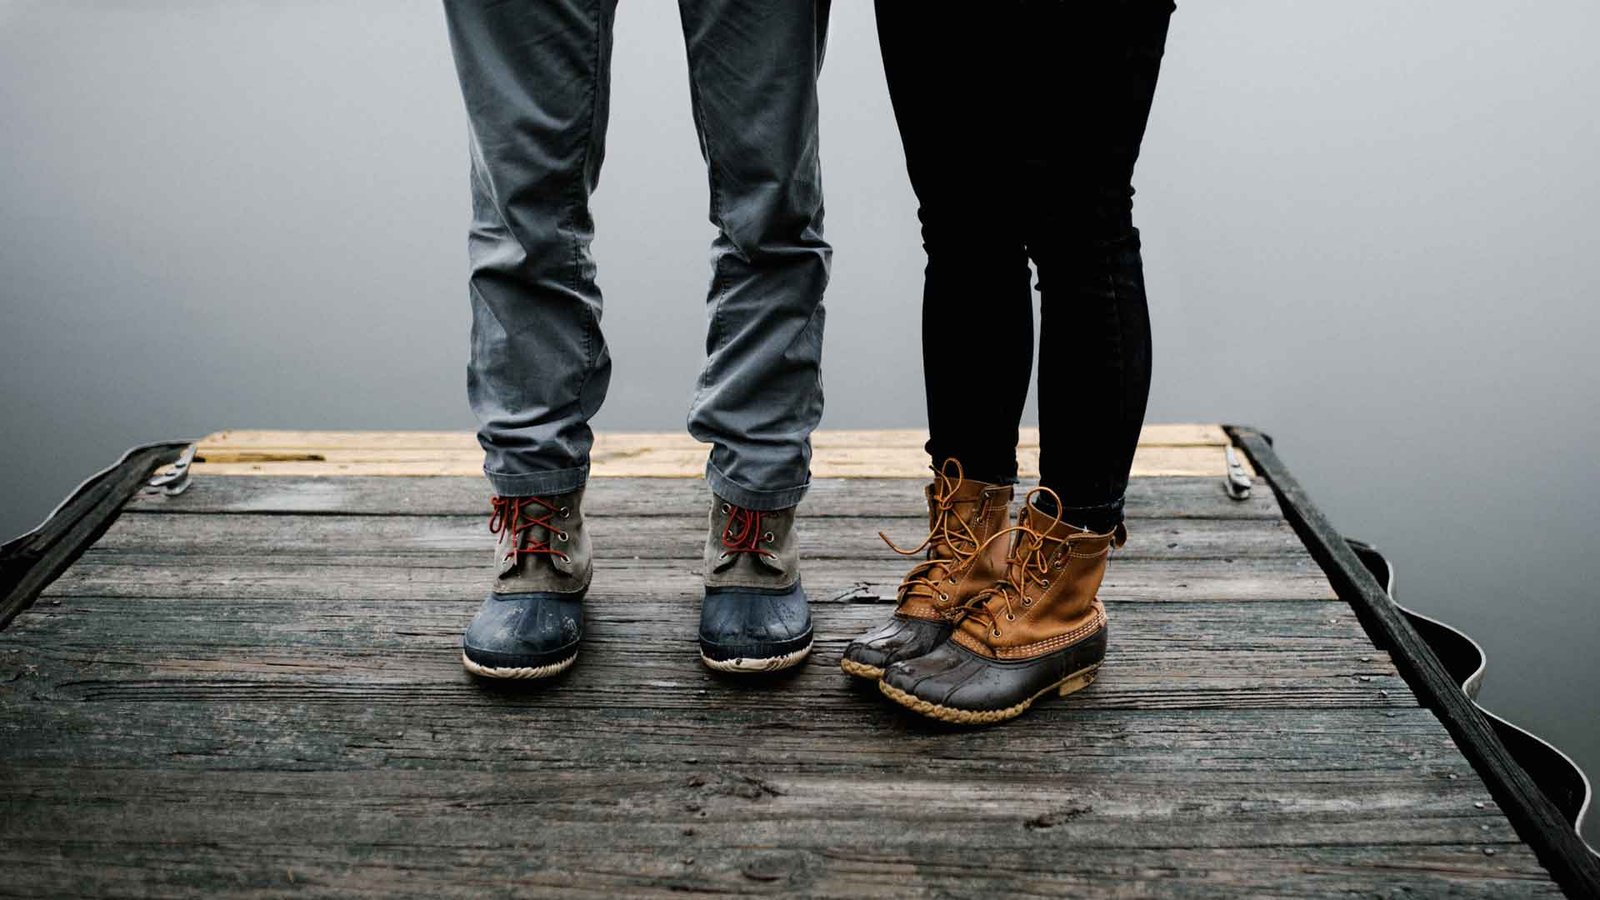 fashion hiking boots